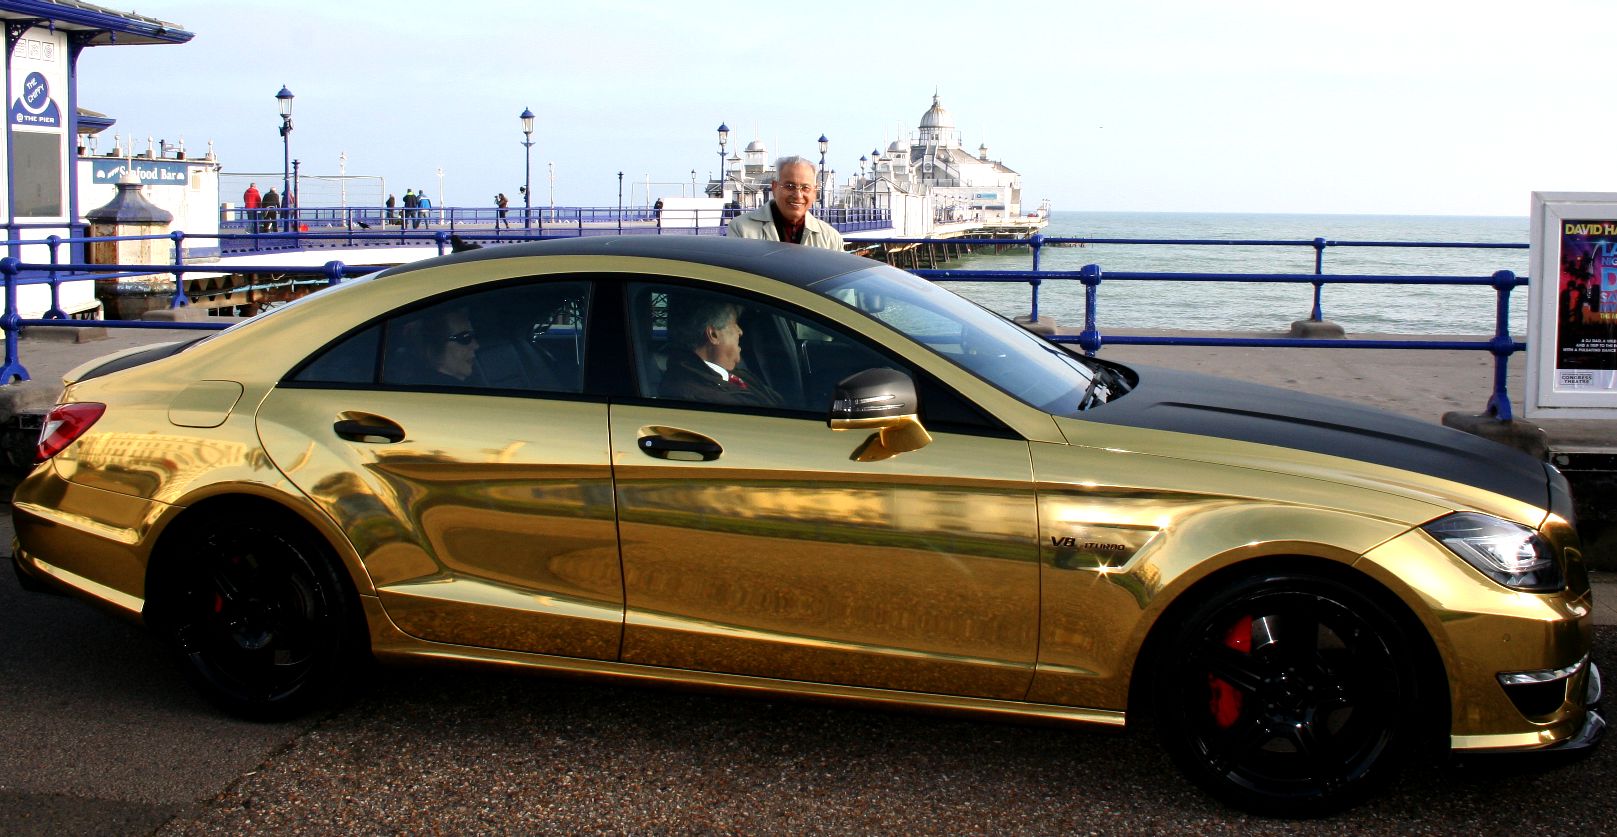 Eastbourne pier owner Sheikh Abid Gulzar gold Mercedes AMG CLS